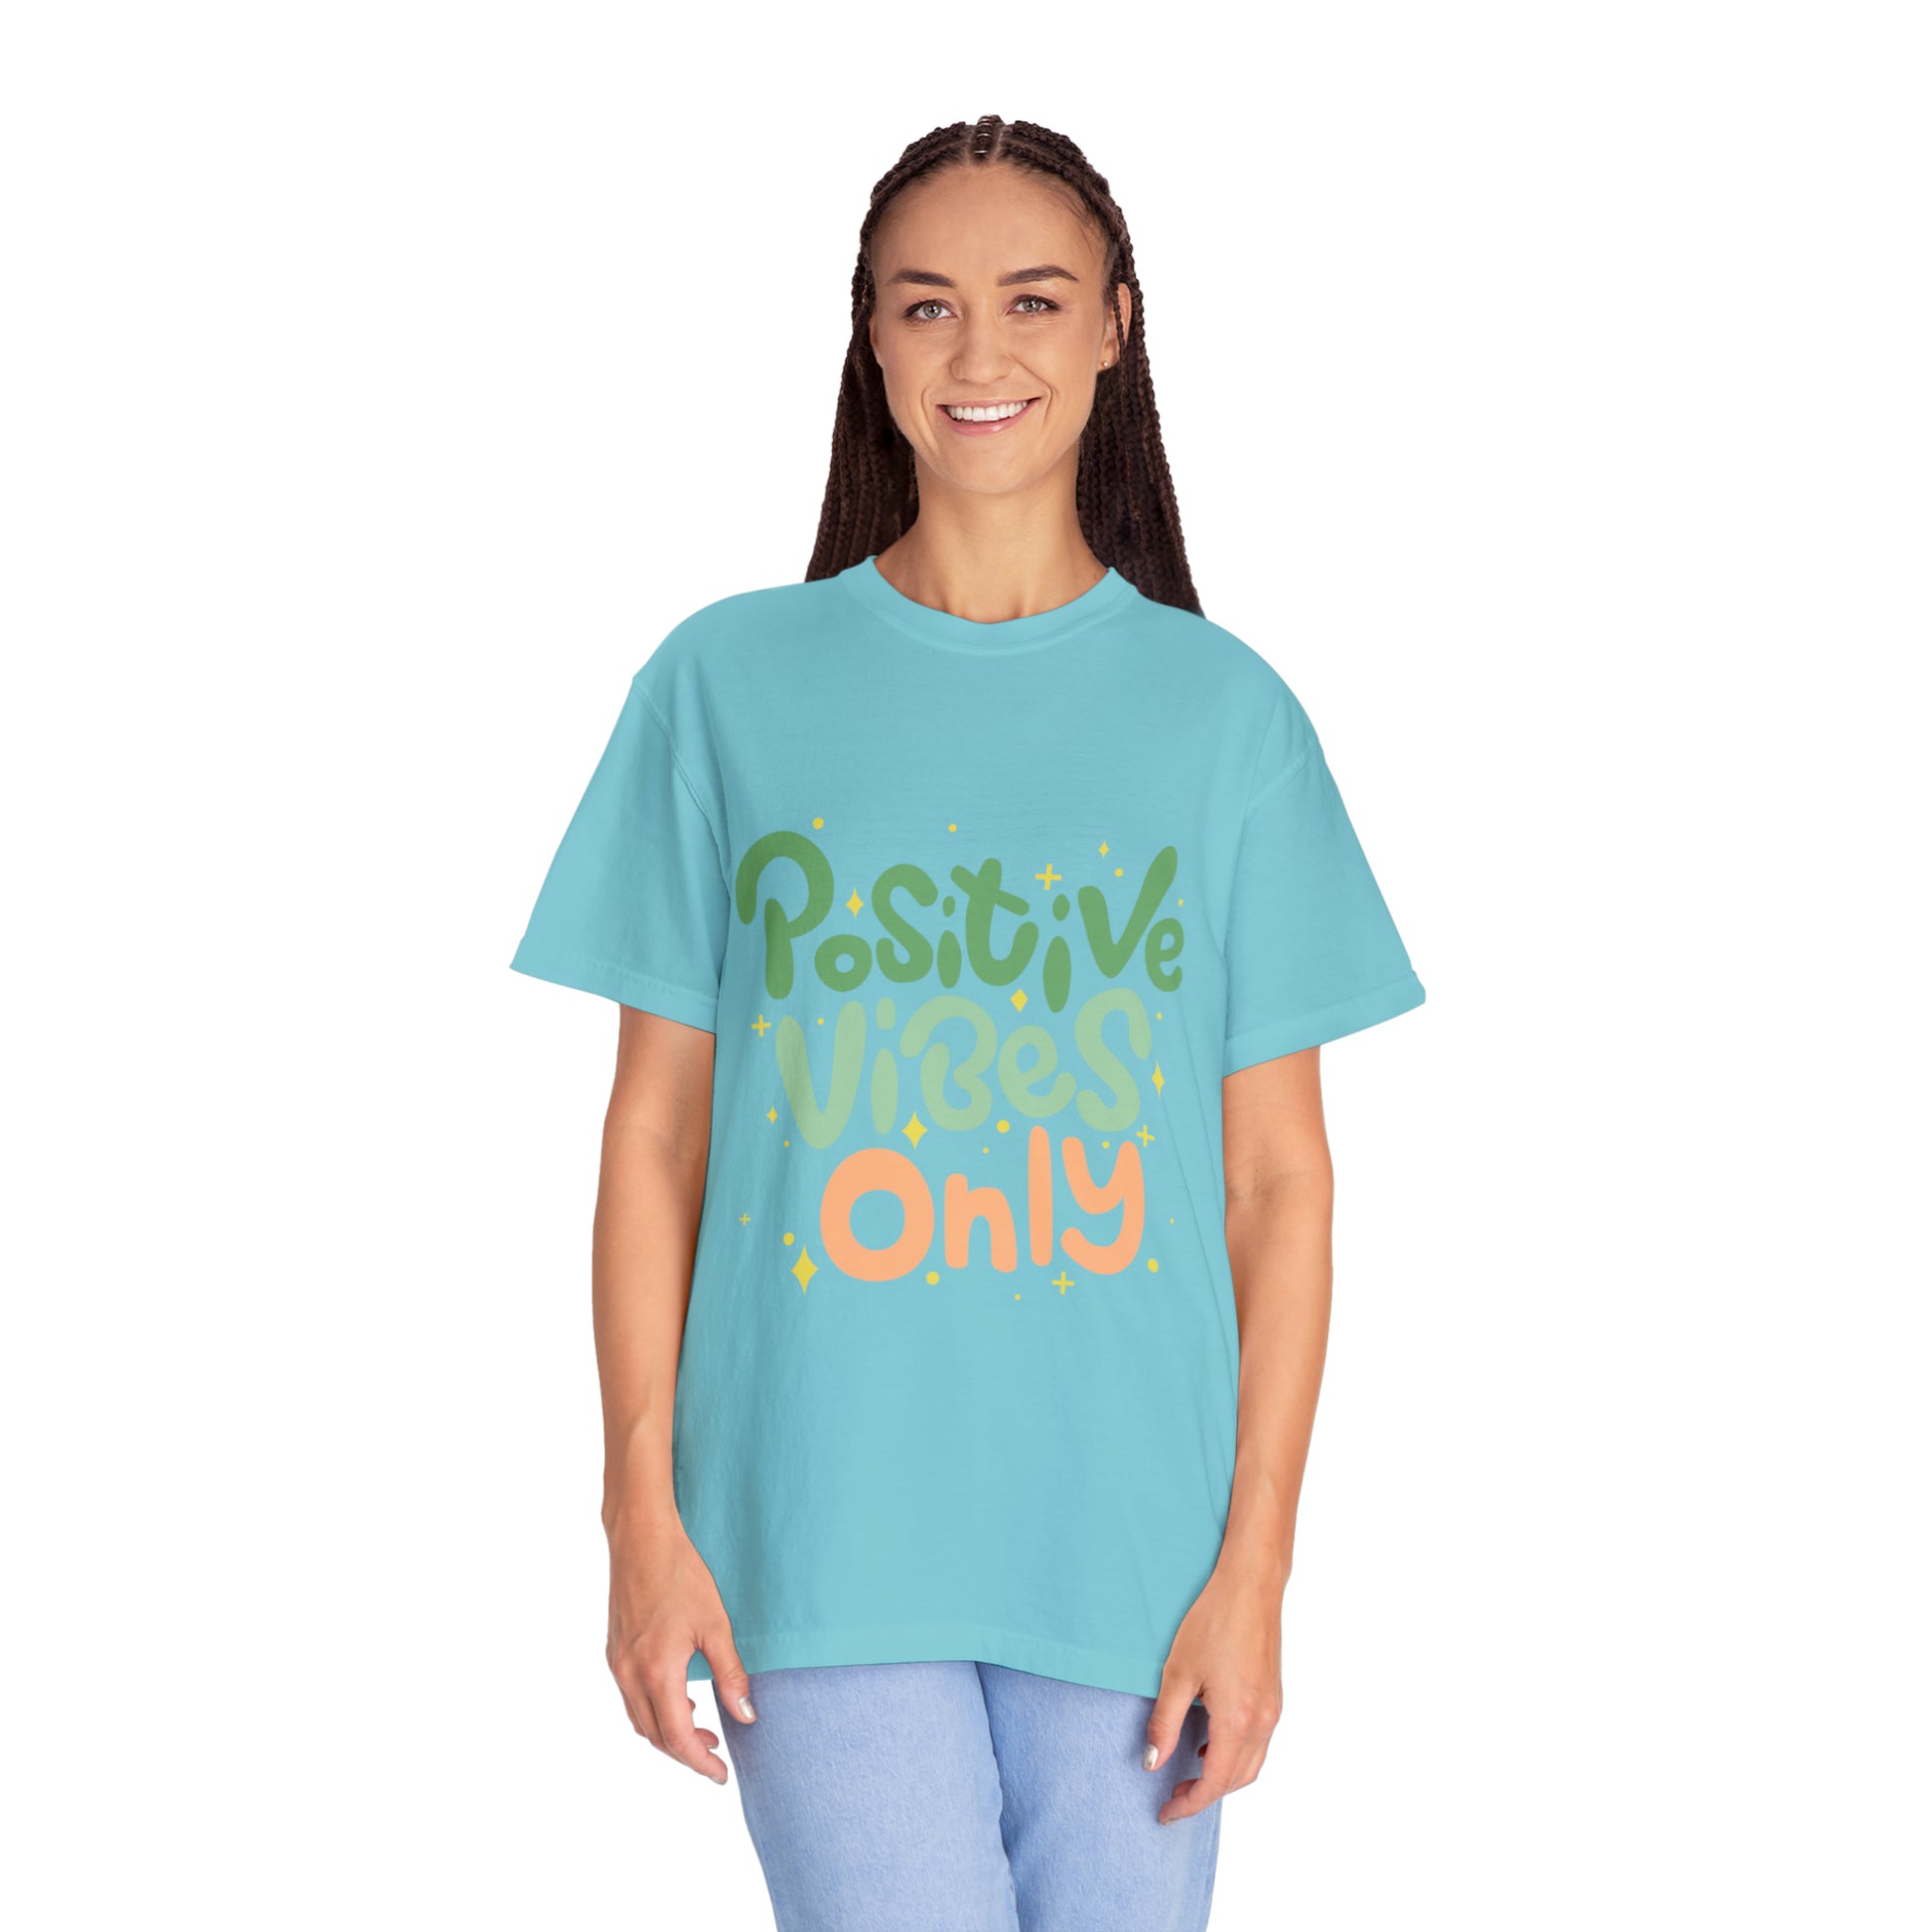 Unisex Garment-Dyed T-shirt - owl2you